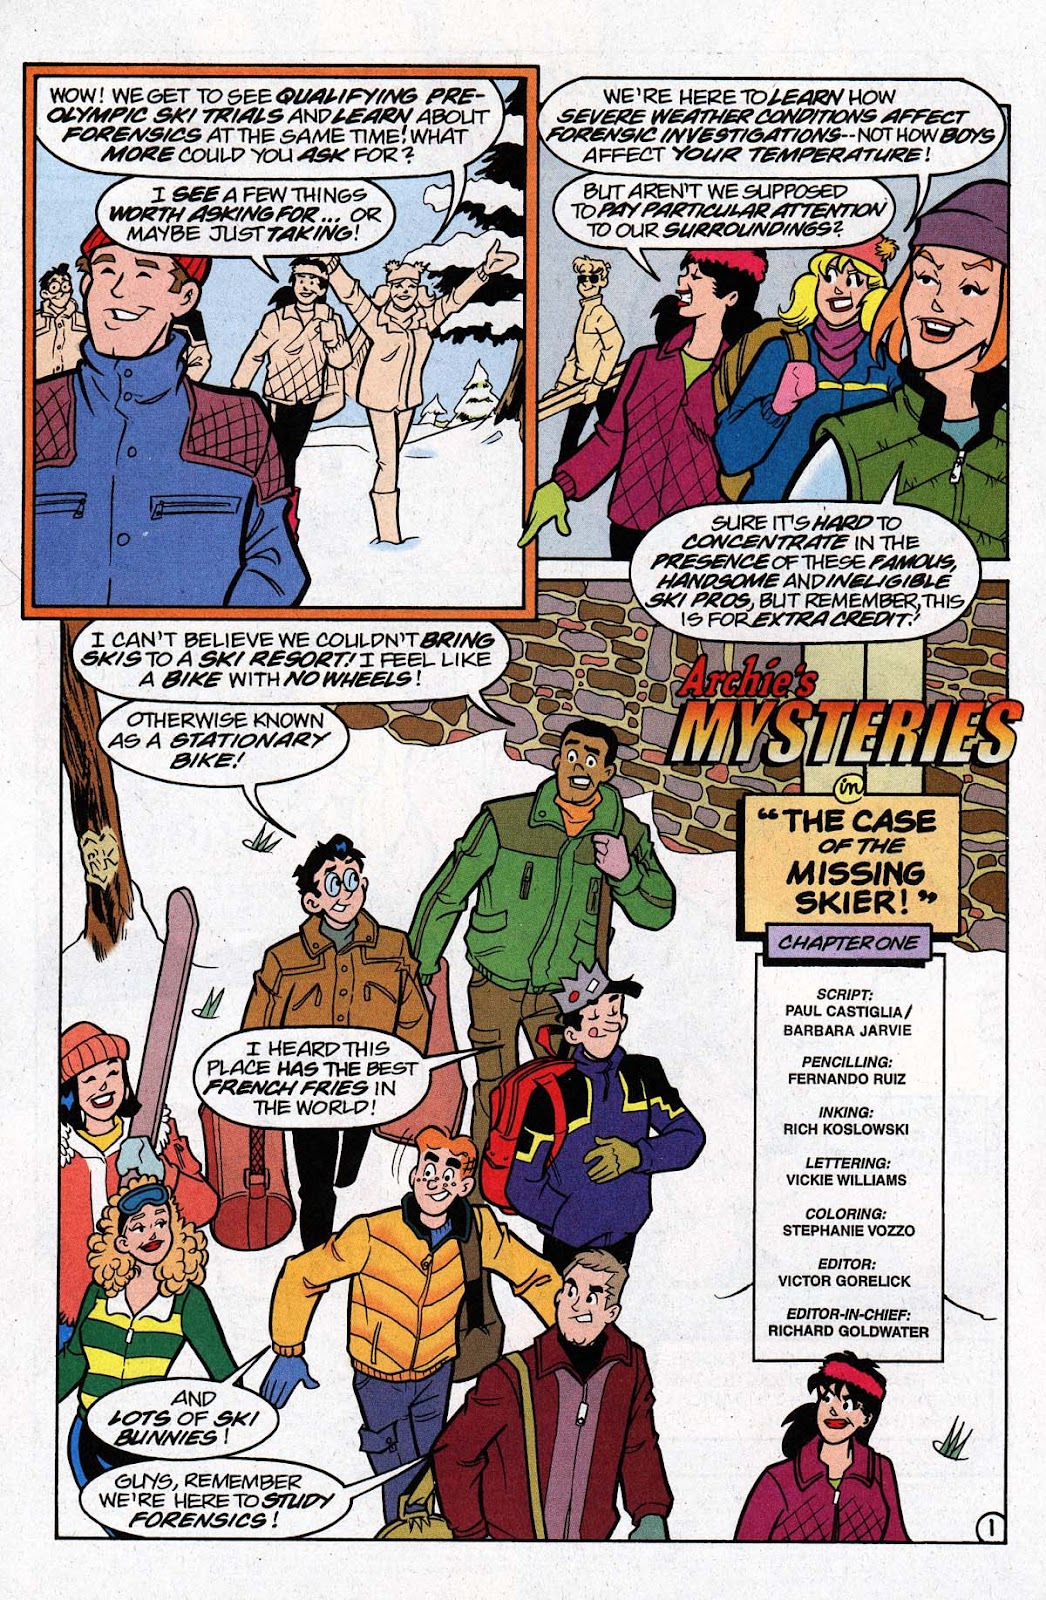 Weirdest Mysteries Archie Porn - Archie s Weird Mysteries Issue 26 | Viewcomic reading comics ...